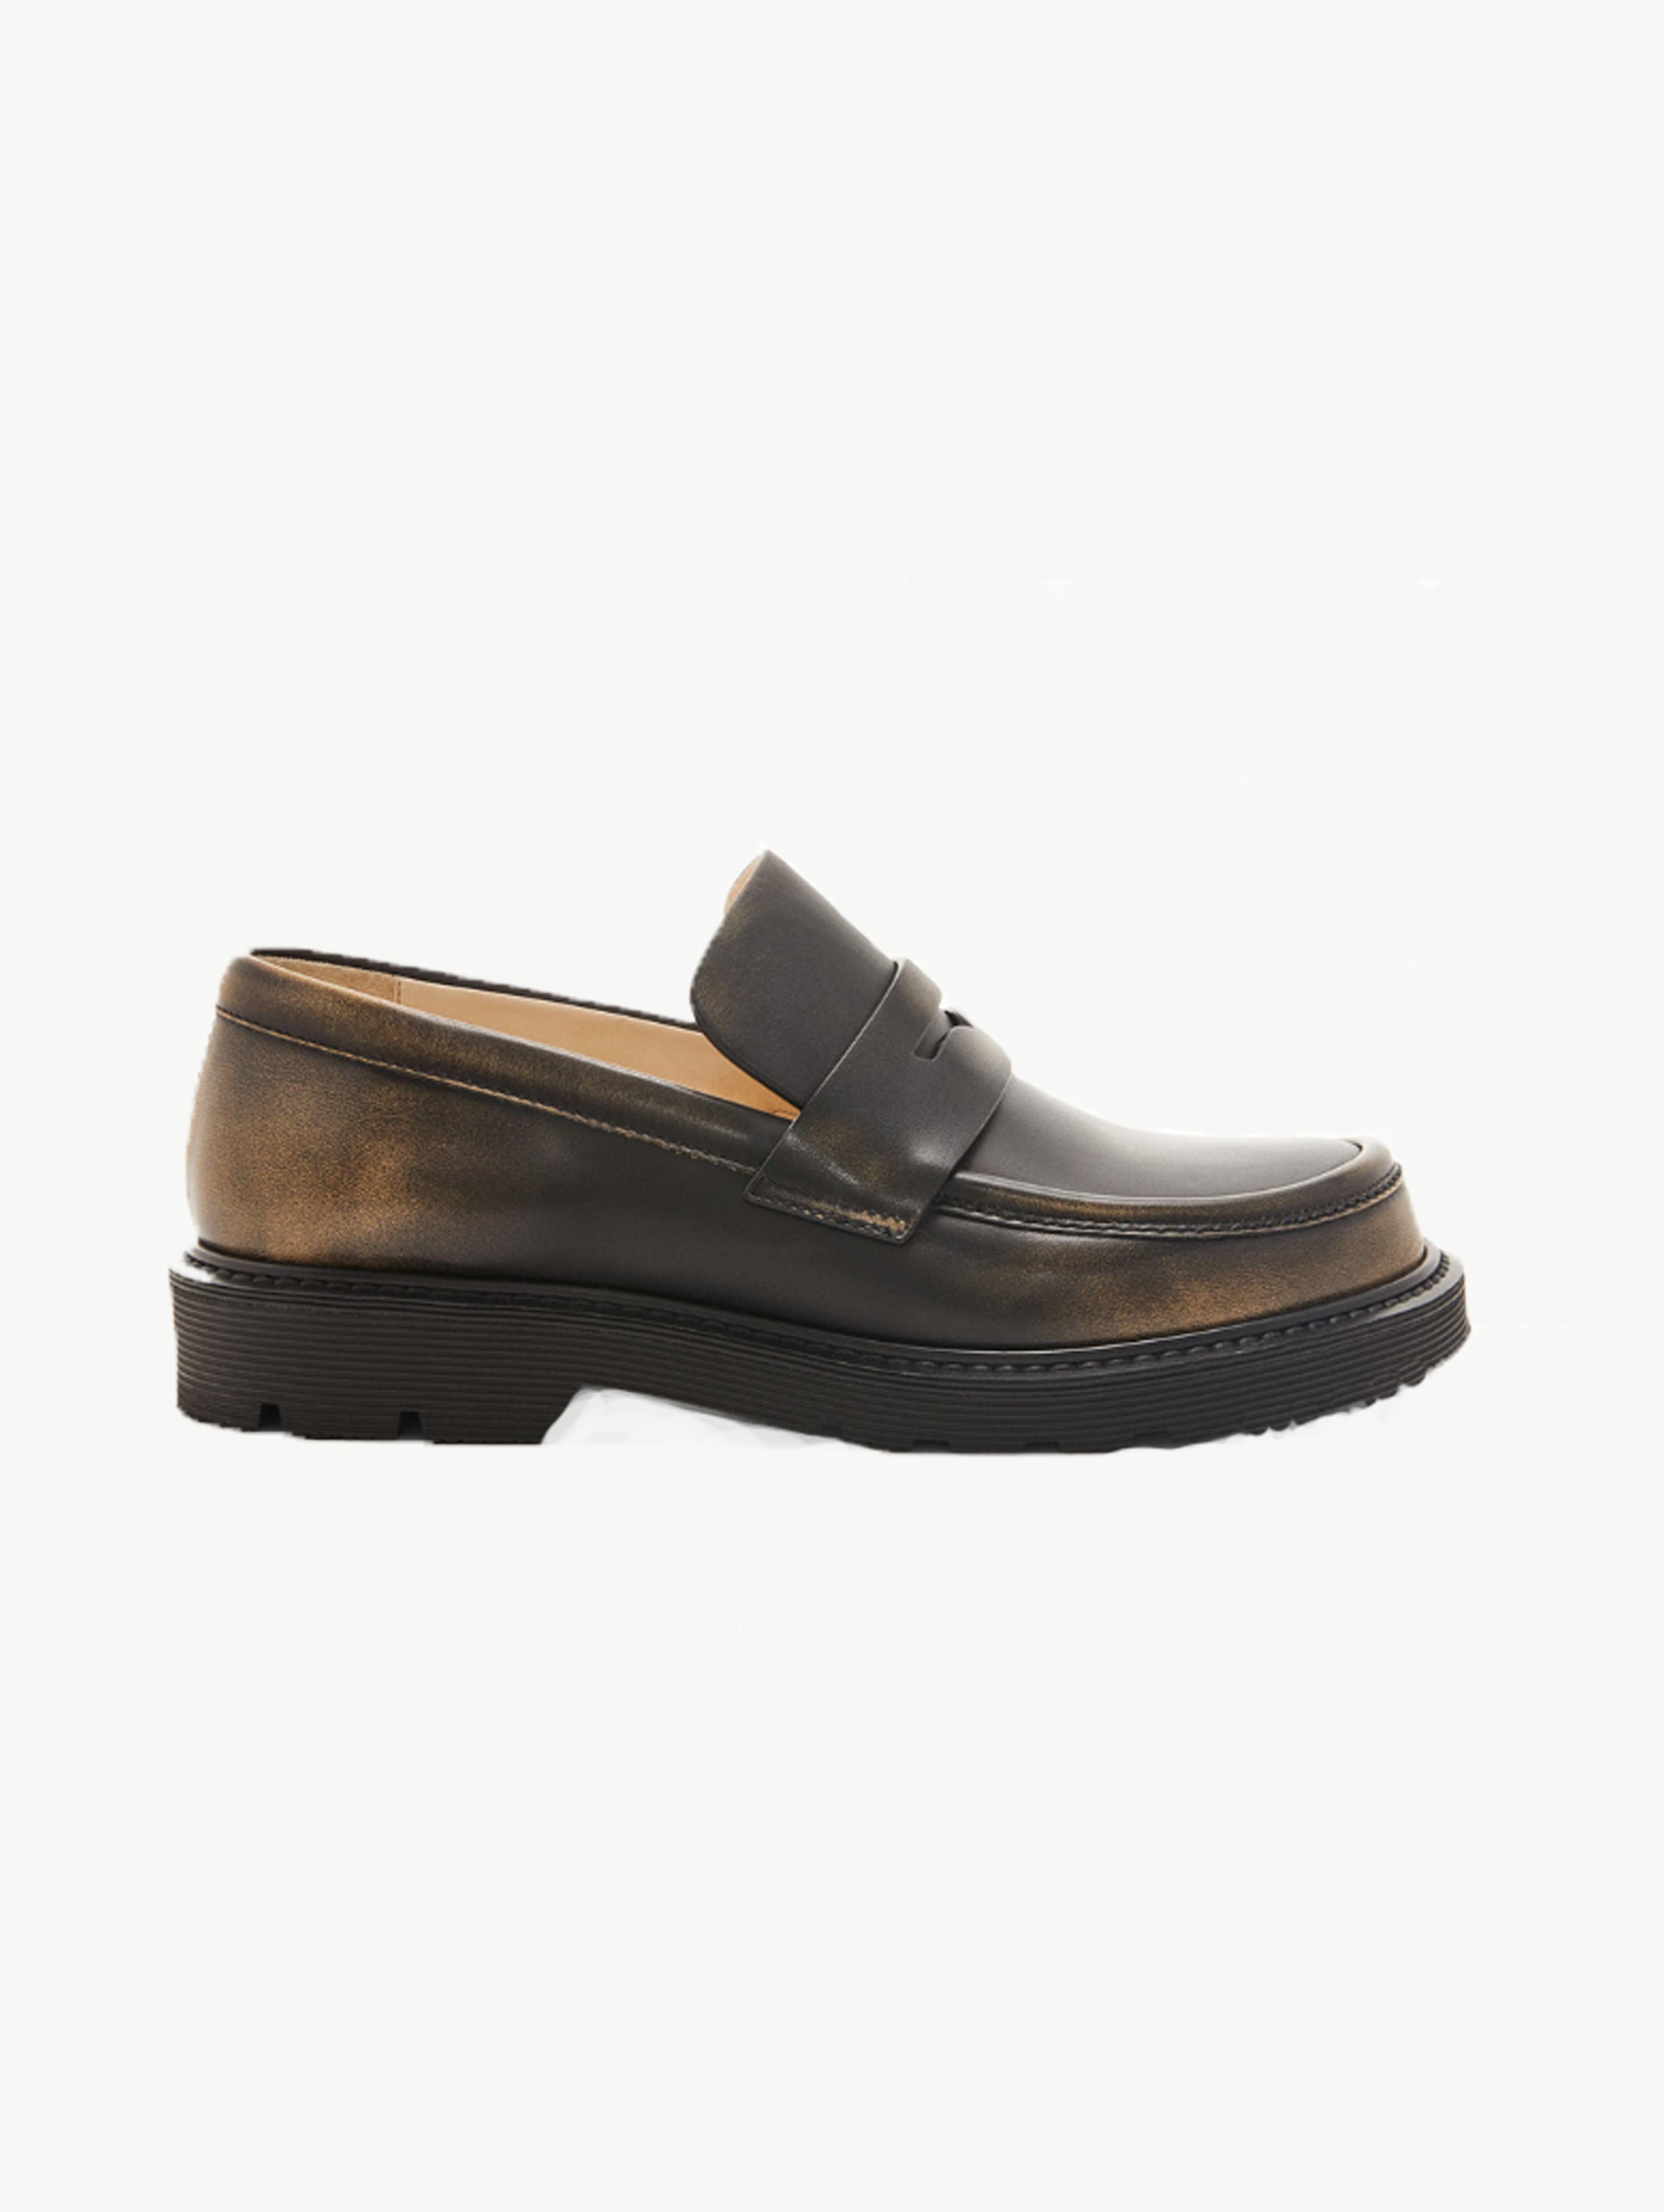 Blaze bi-colour leather penny loafers